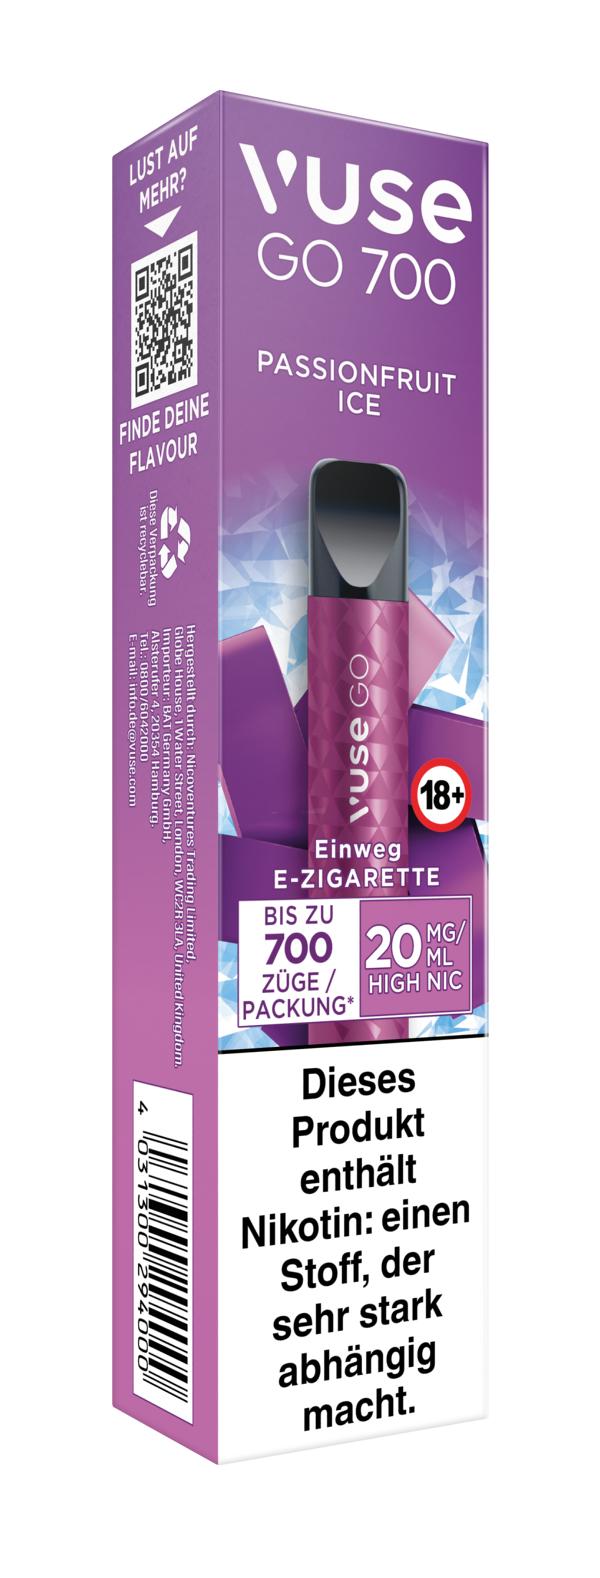 Vuse Go 700 Einweg E-Zigarette Passionfruit Ice 20mg/ml Nikotin